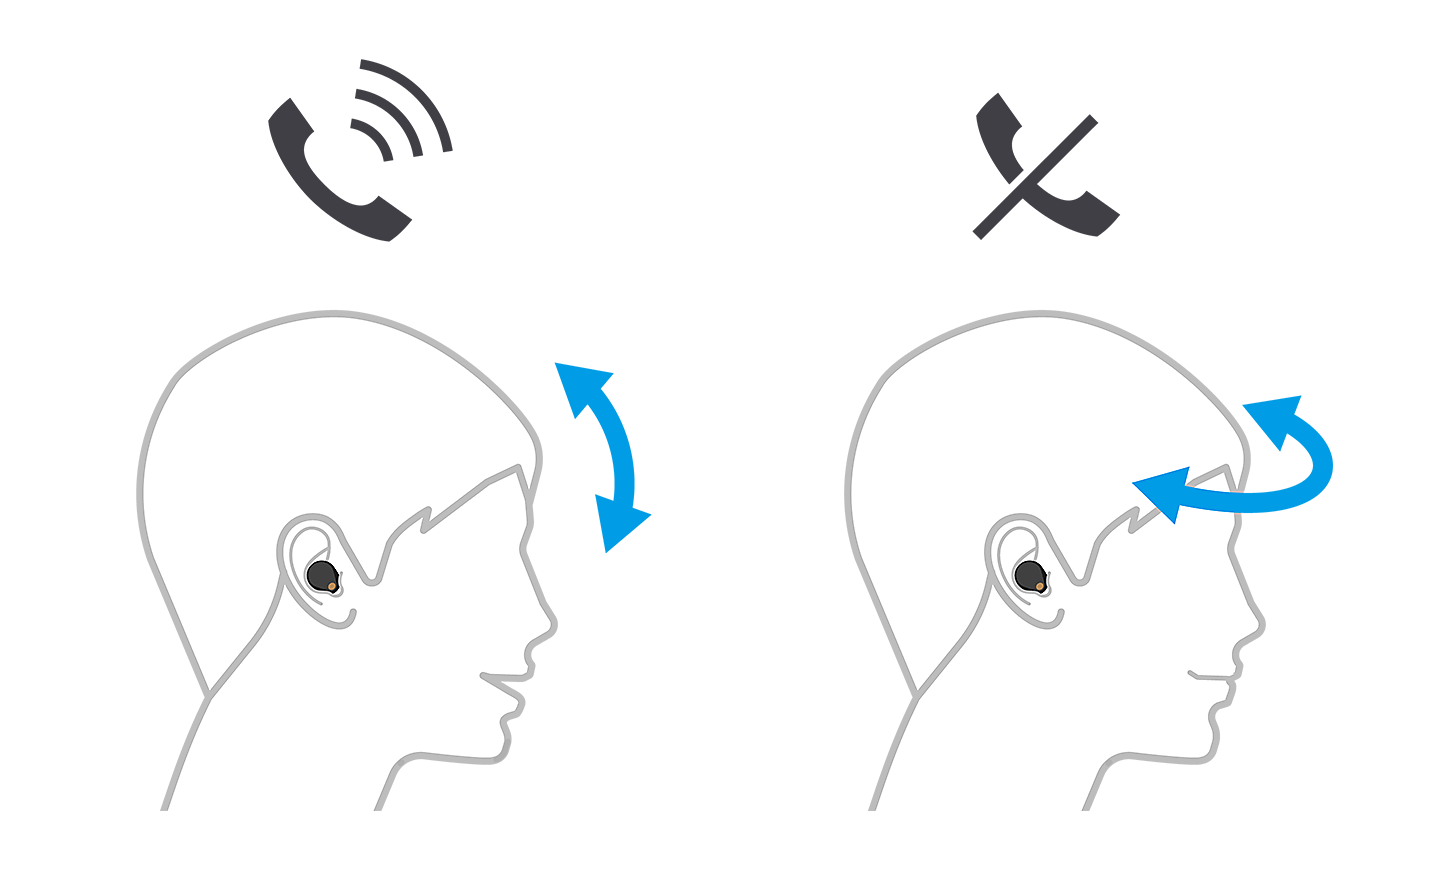 Snímek dvou hlav, levá se šipkami nahoru a dolů přijímá hovor, zatímco pravá se šipkami doleva a doprava hovor odmítá